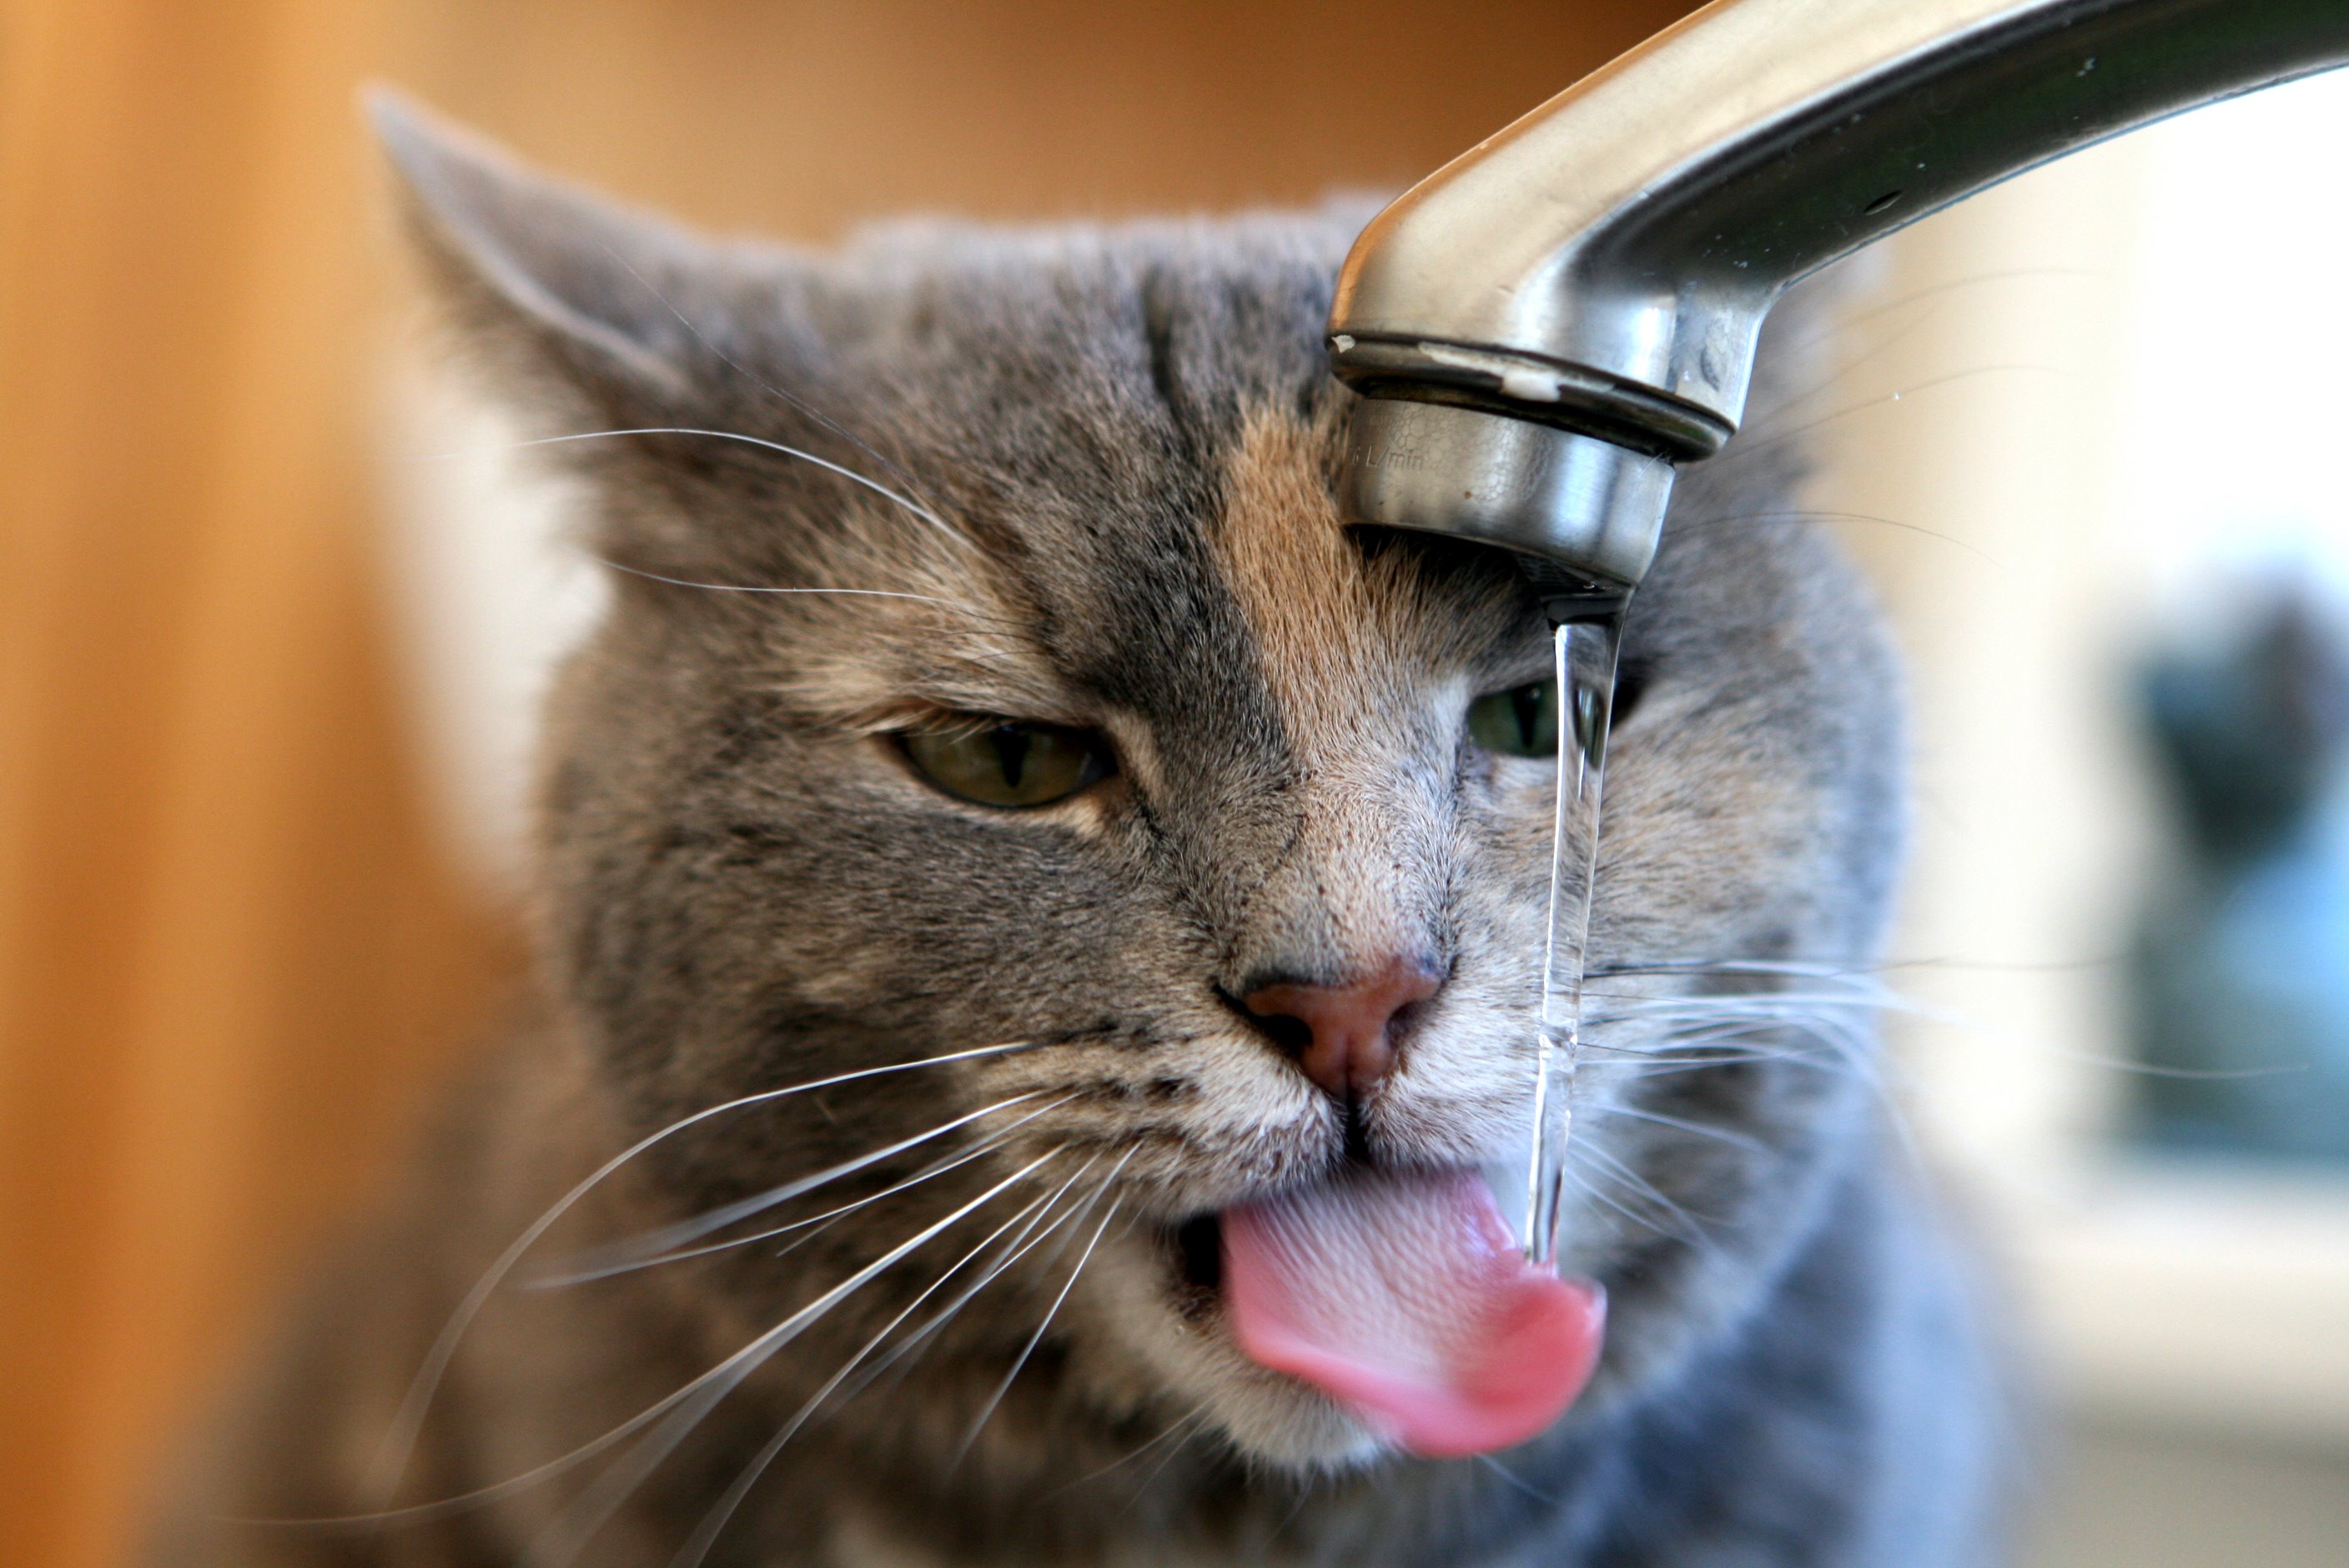 cats, animals, tongue, drinking, sinks - desktop wallpaper